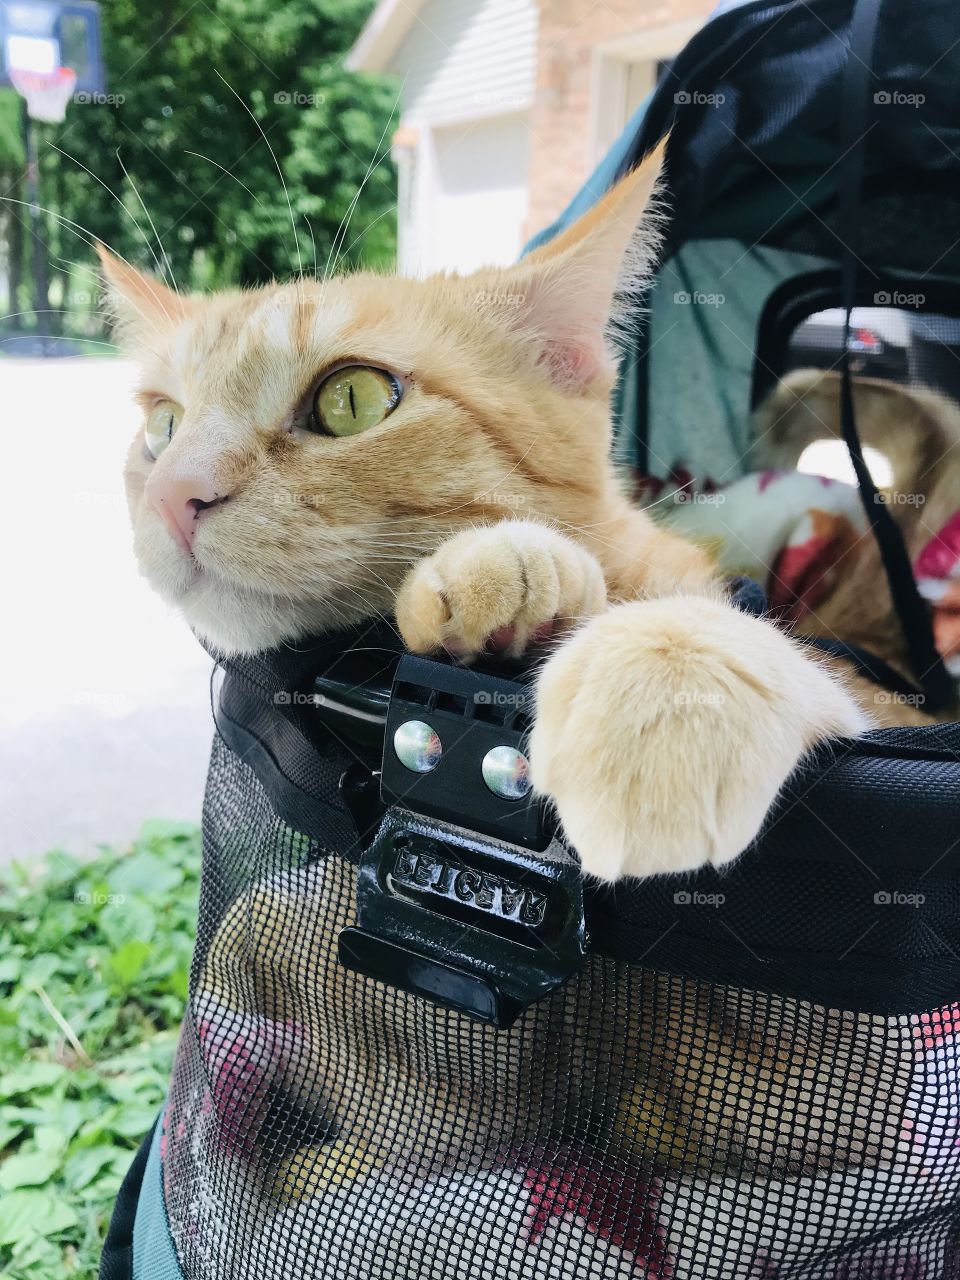 Darling orange tabby cat sitting in his stroller enjoying looking up in a nearby tree! 